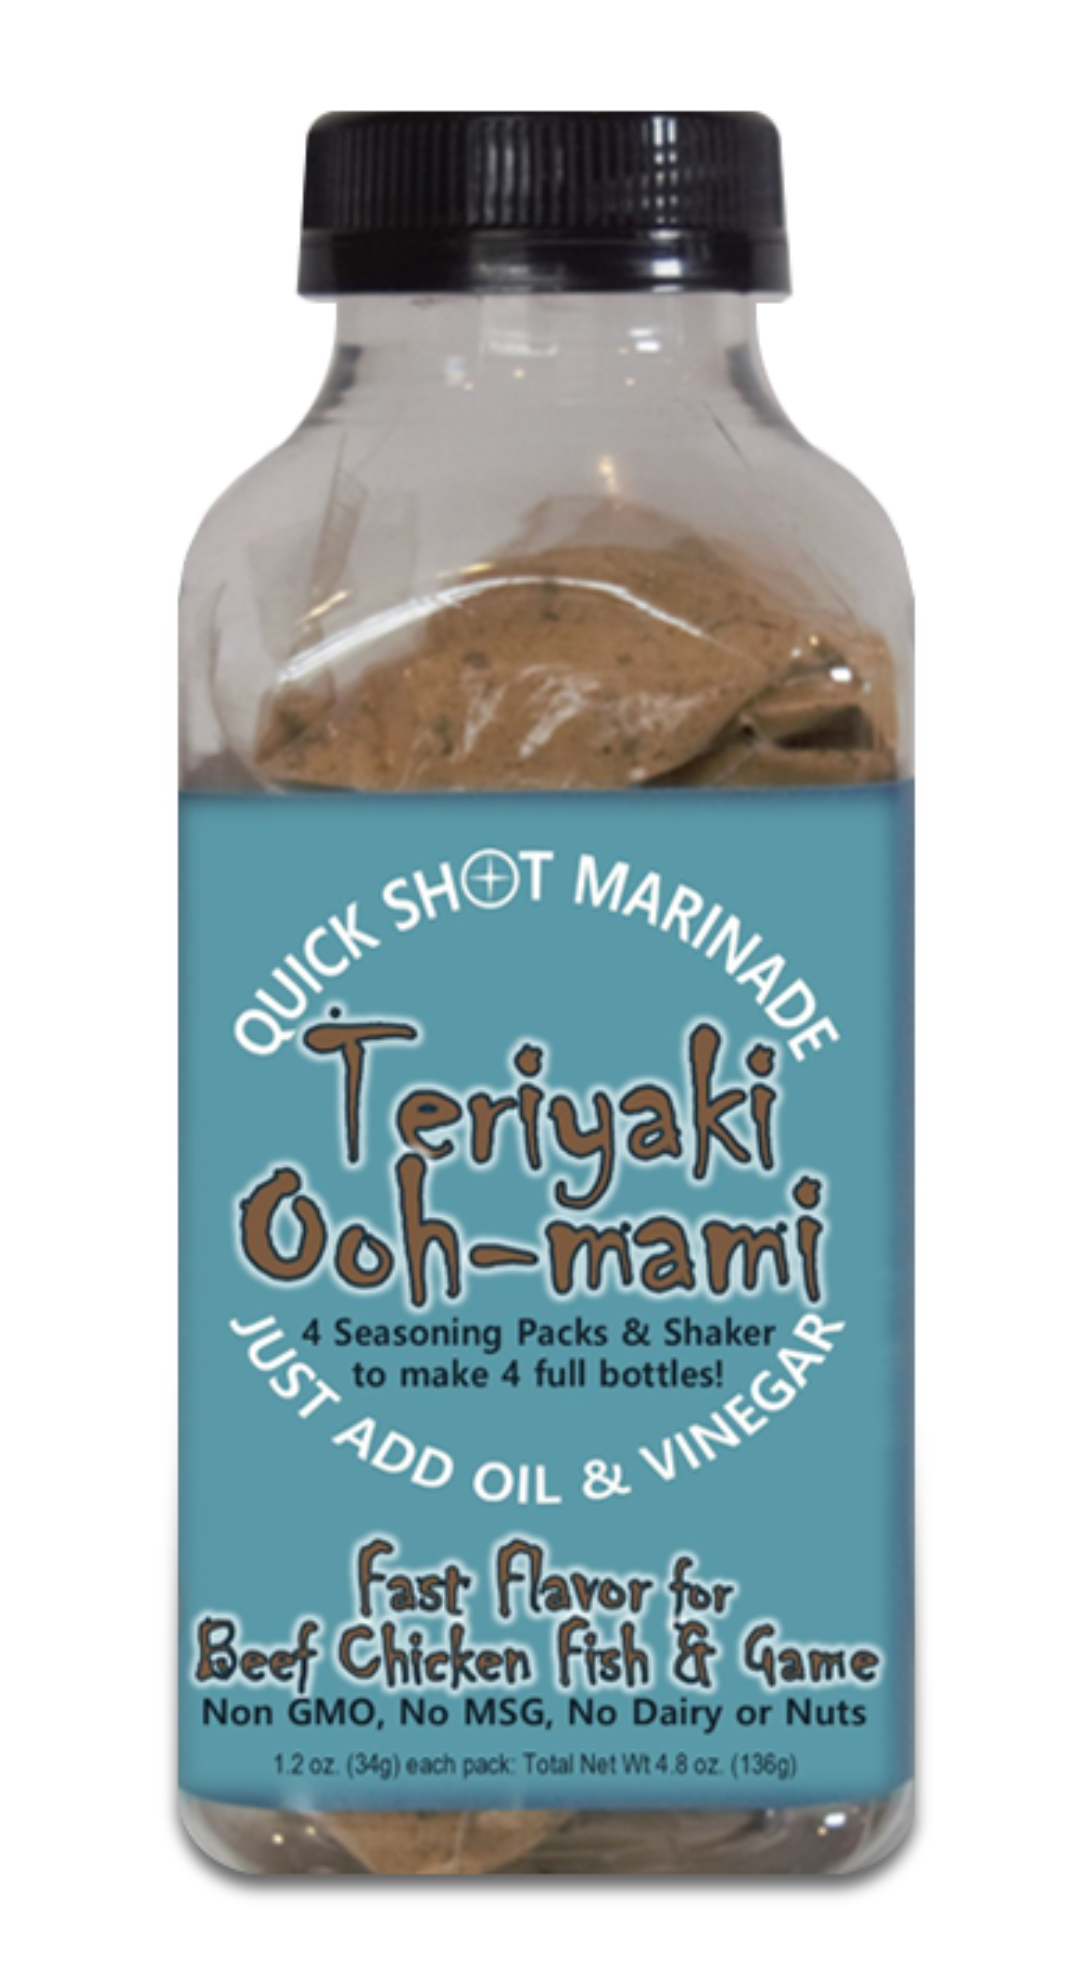 TERIYAKI OOH-MAMI Seasoning Packs & Shaker to make 4 Bottles of Fast Flavor Marinade